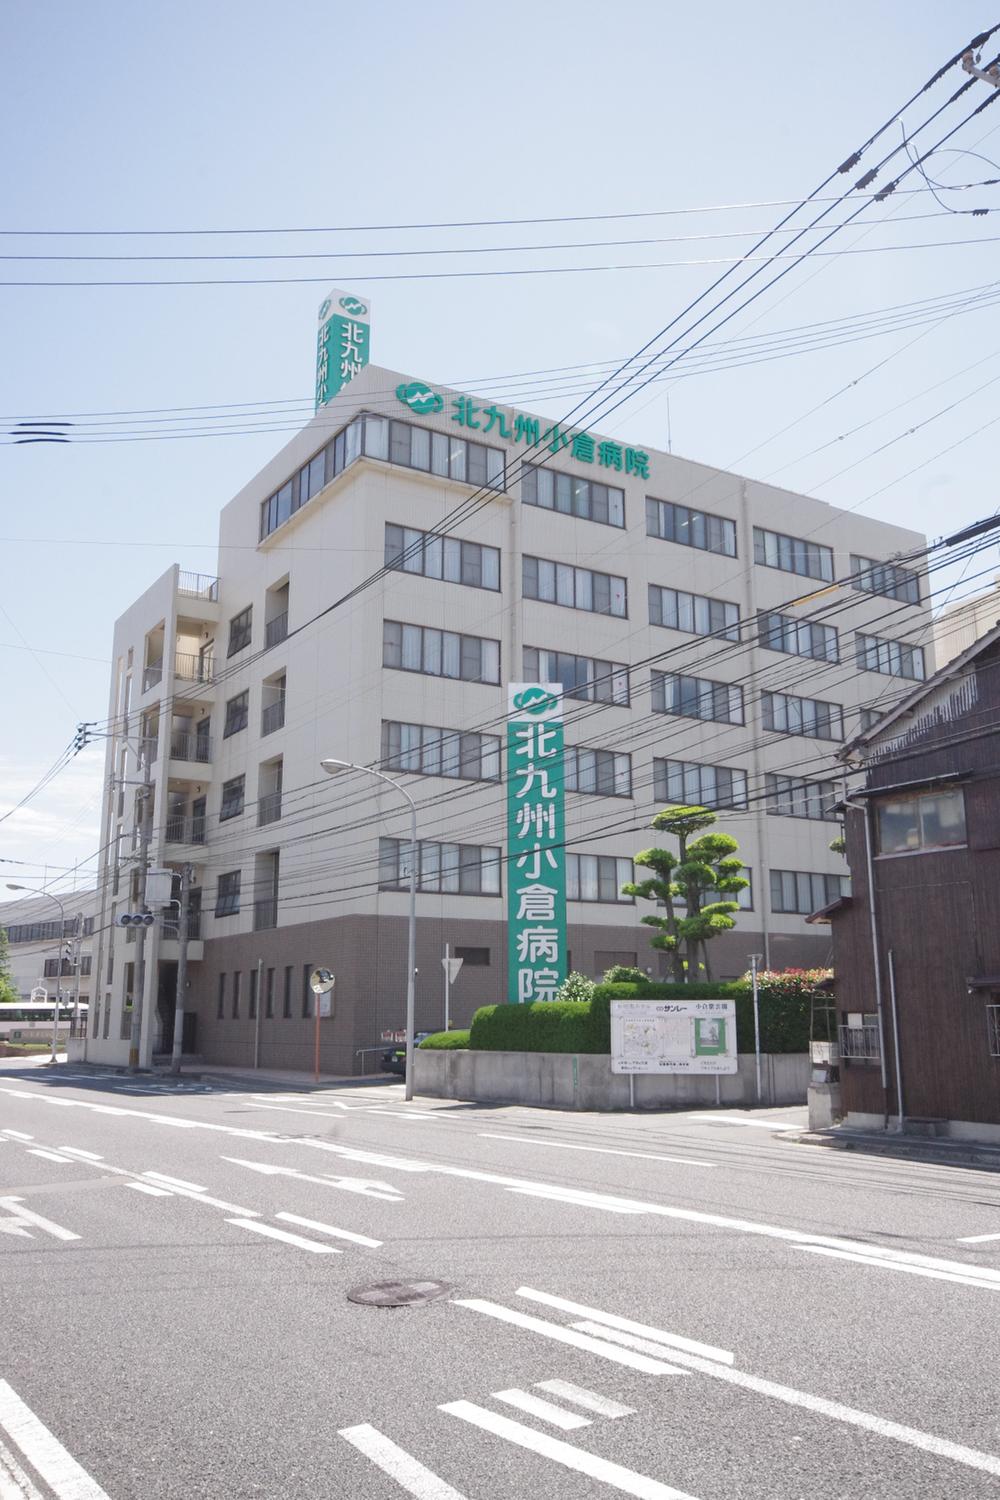 Hospital. 802m to Kitakyushu Kokura hospital